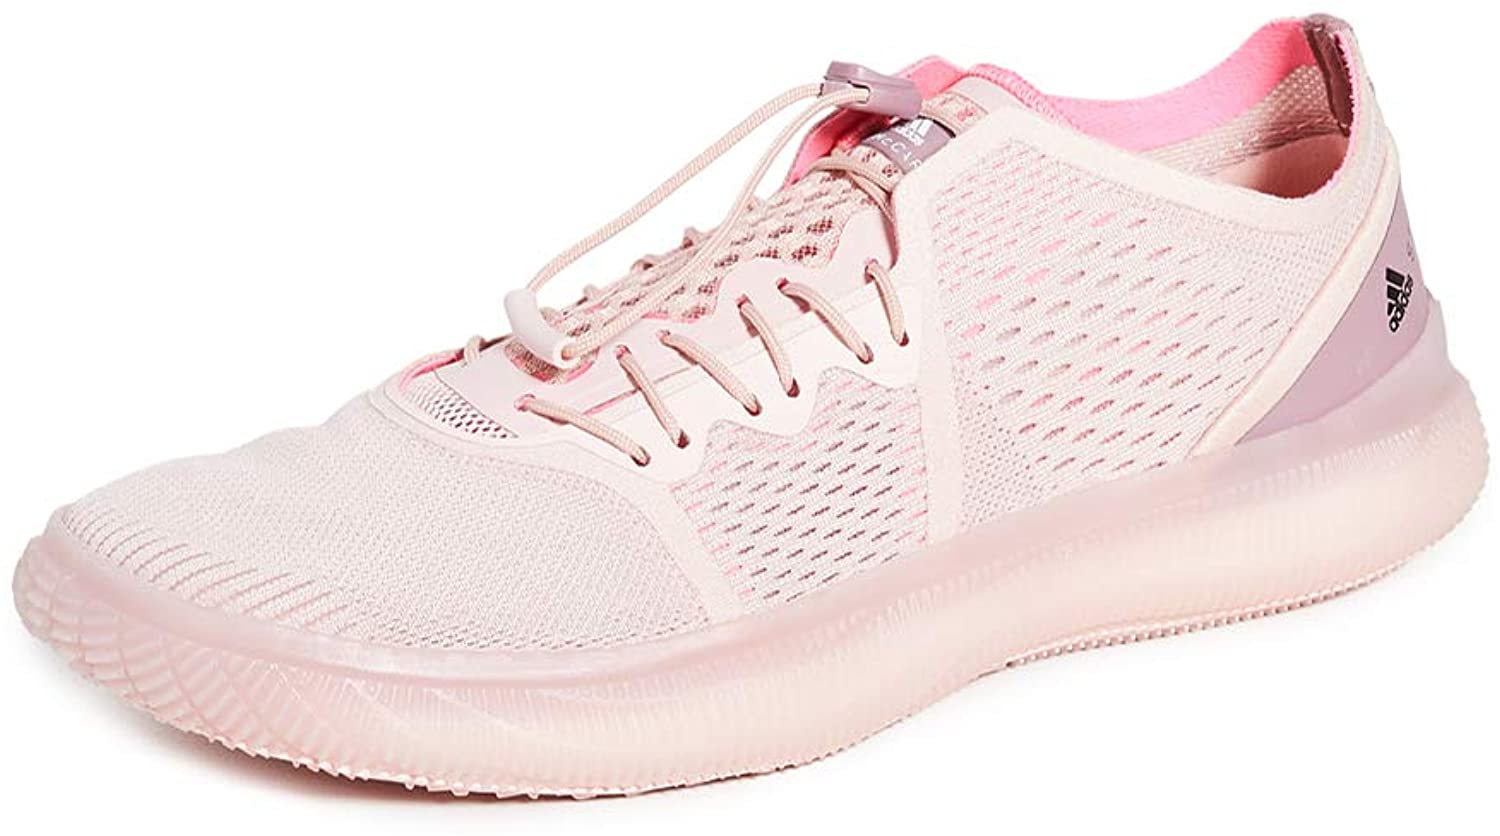 adidas by Stella McCartney Women's Pureboost Trainer S. Sneakers | eBay